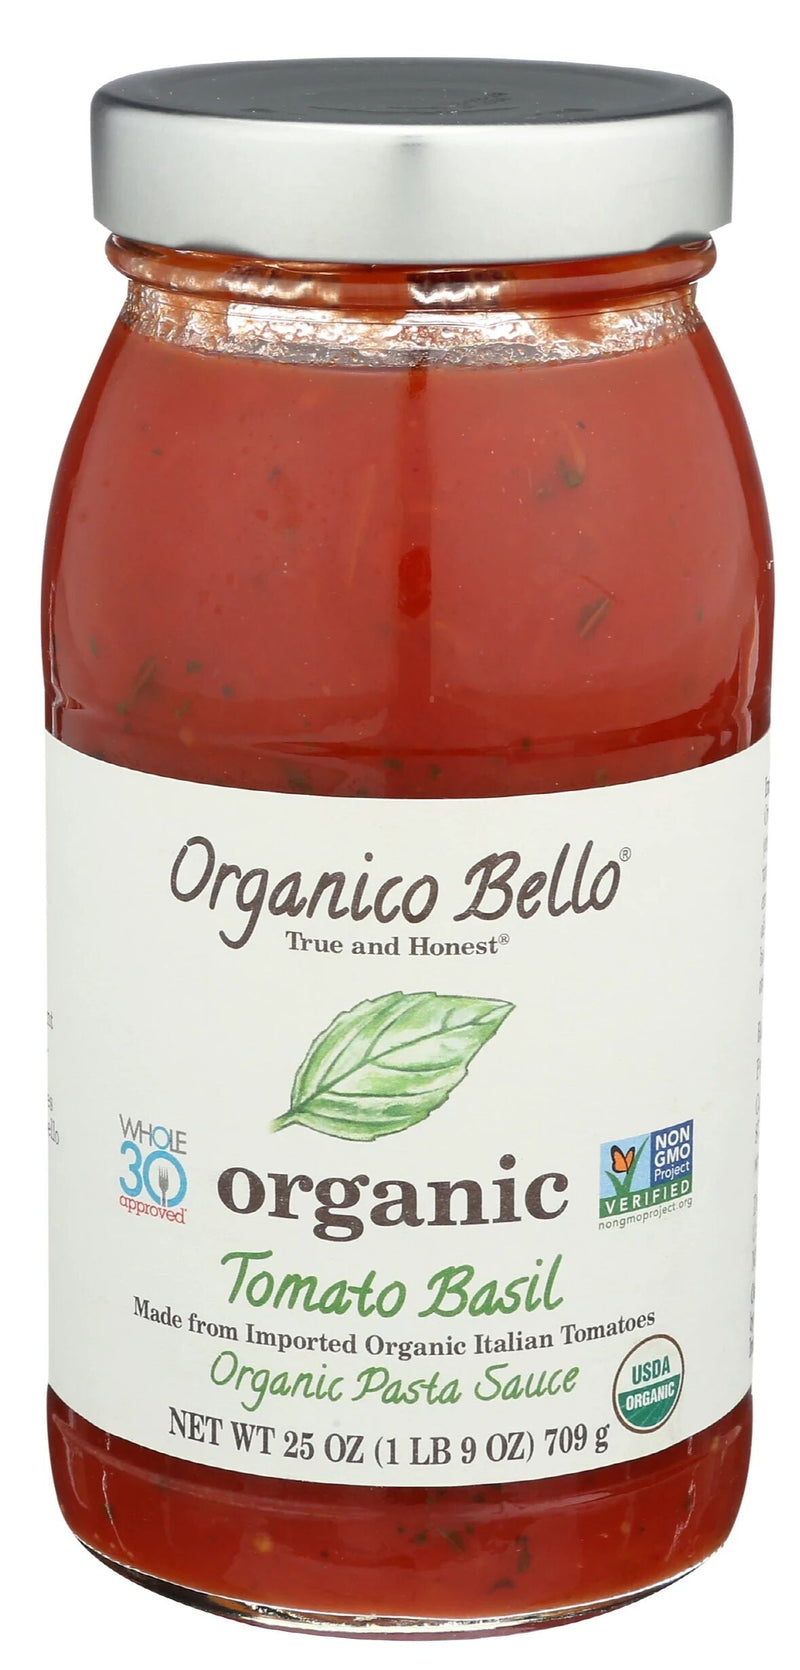 Save on Organico Bello True & Honest Pasta Sauce Tomato Basil